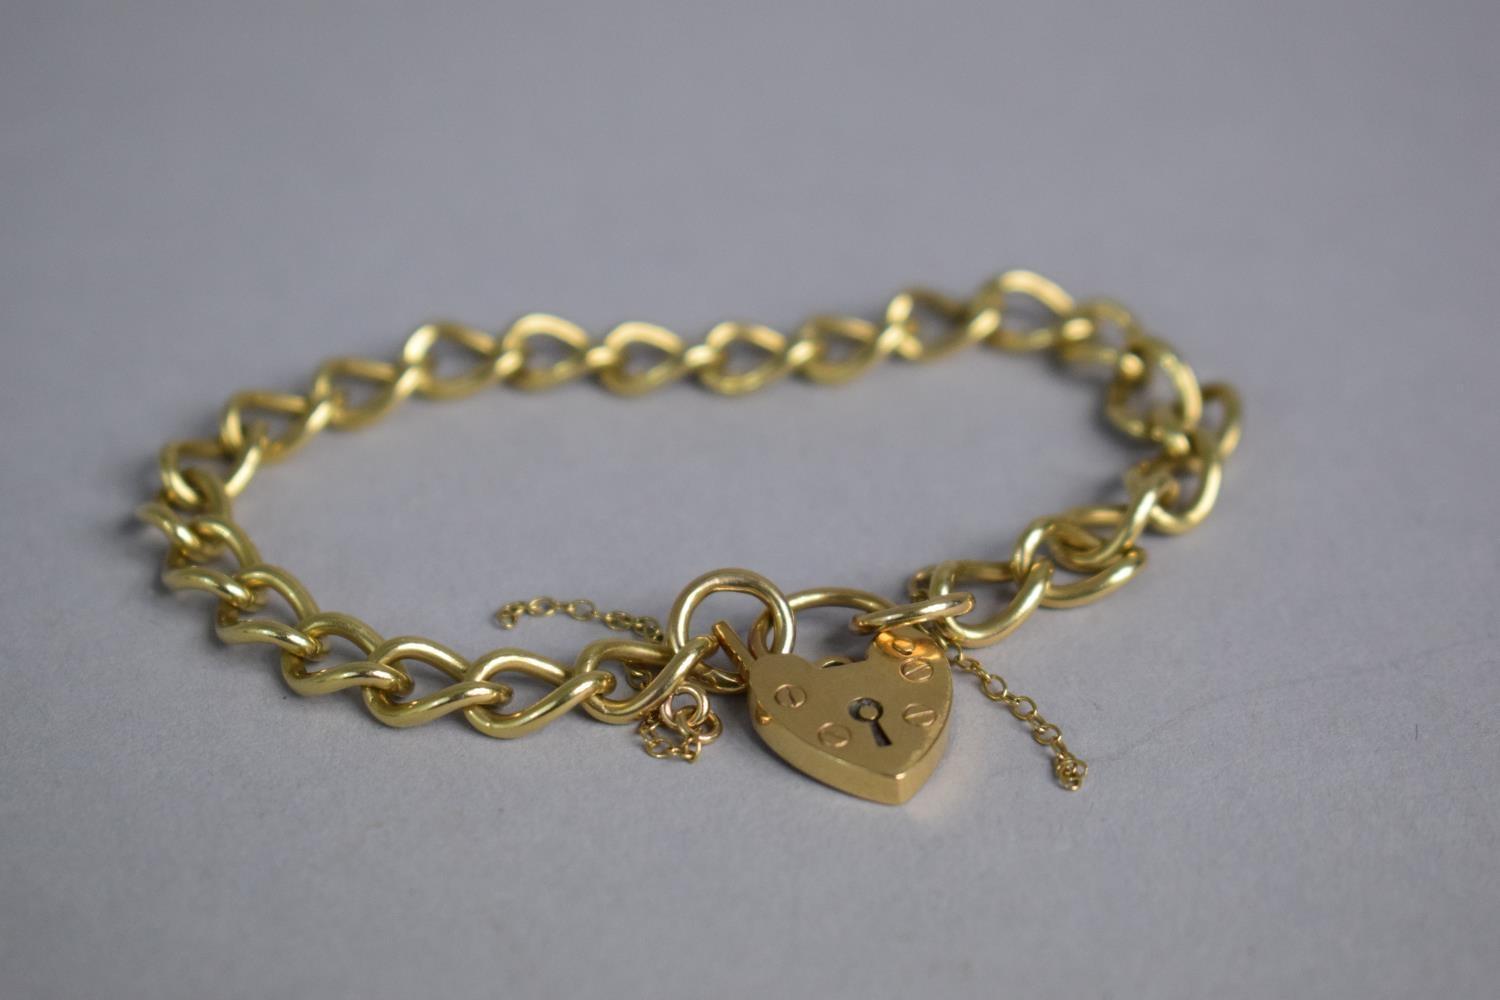 A 9ct Gold Charm Bracelet-No Charms. 15.6gms